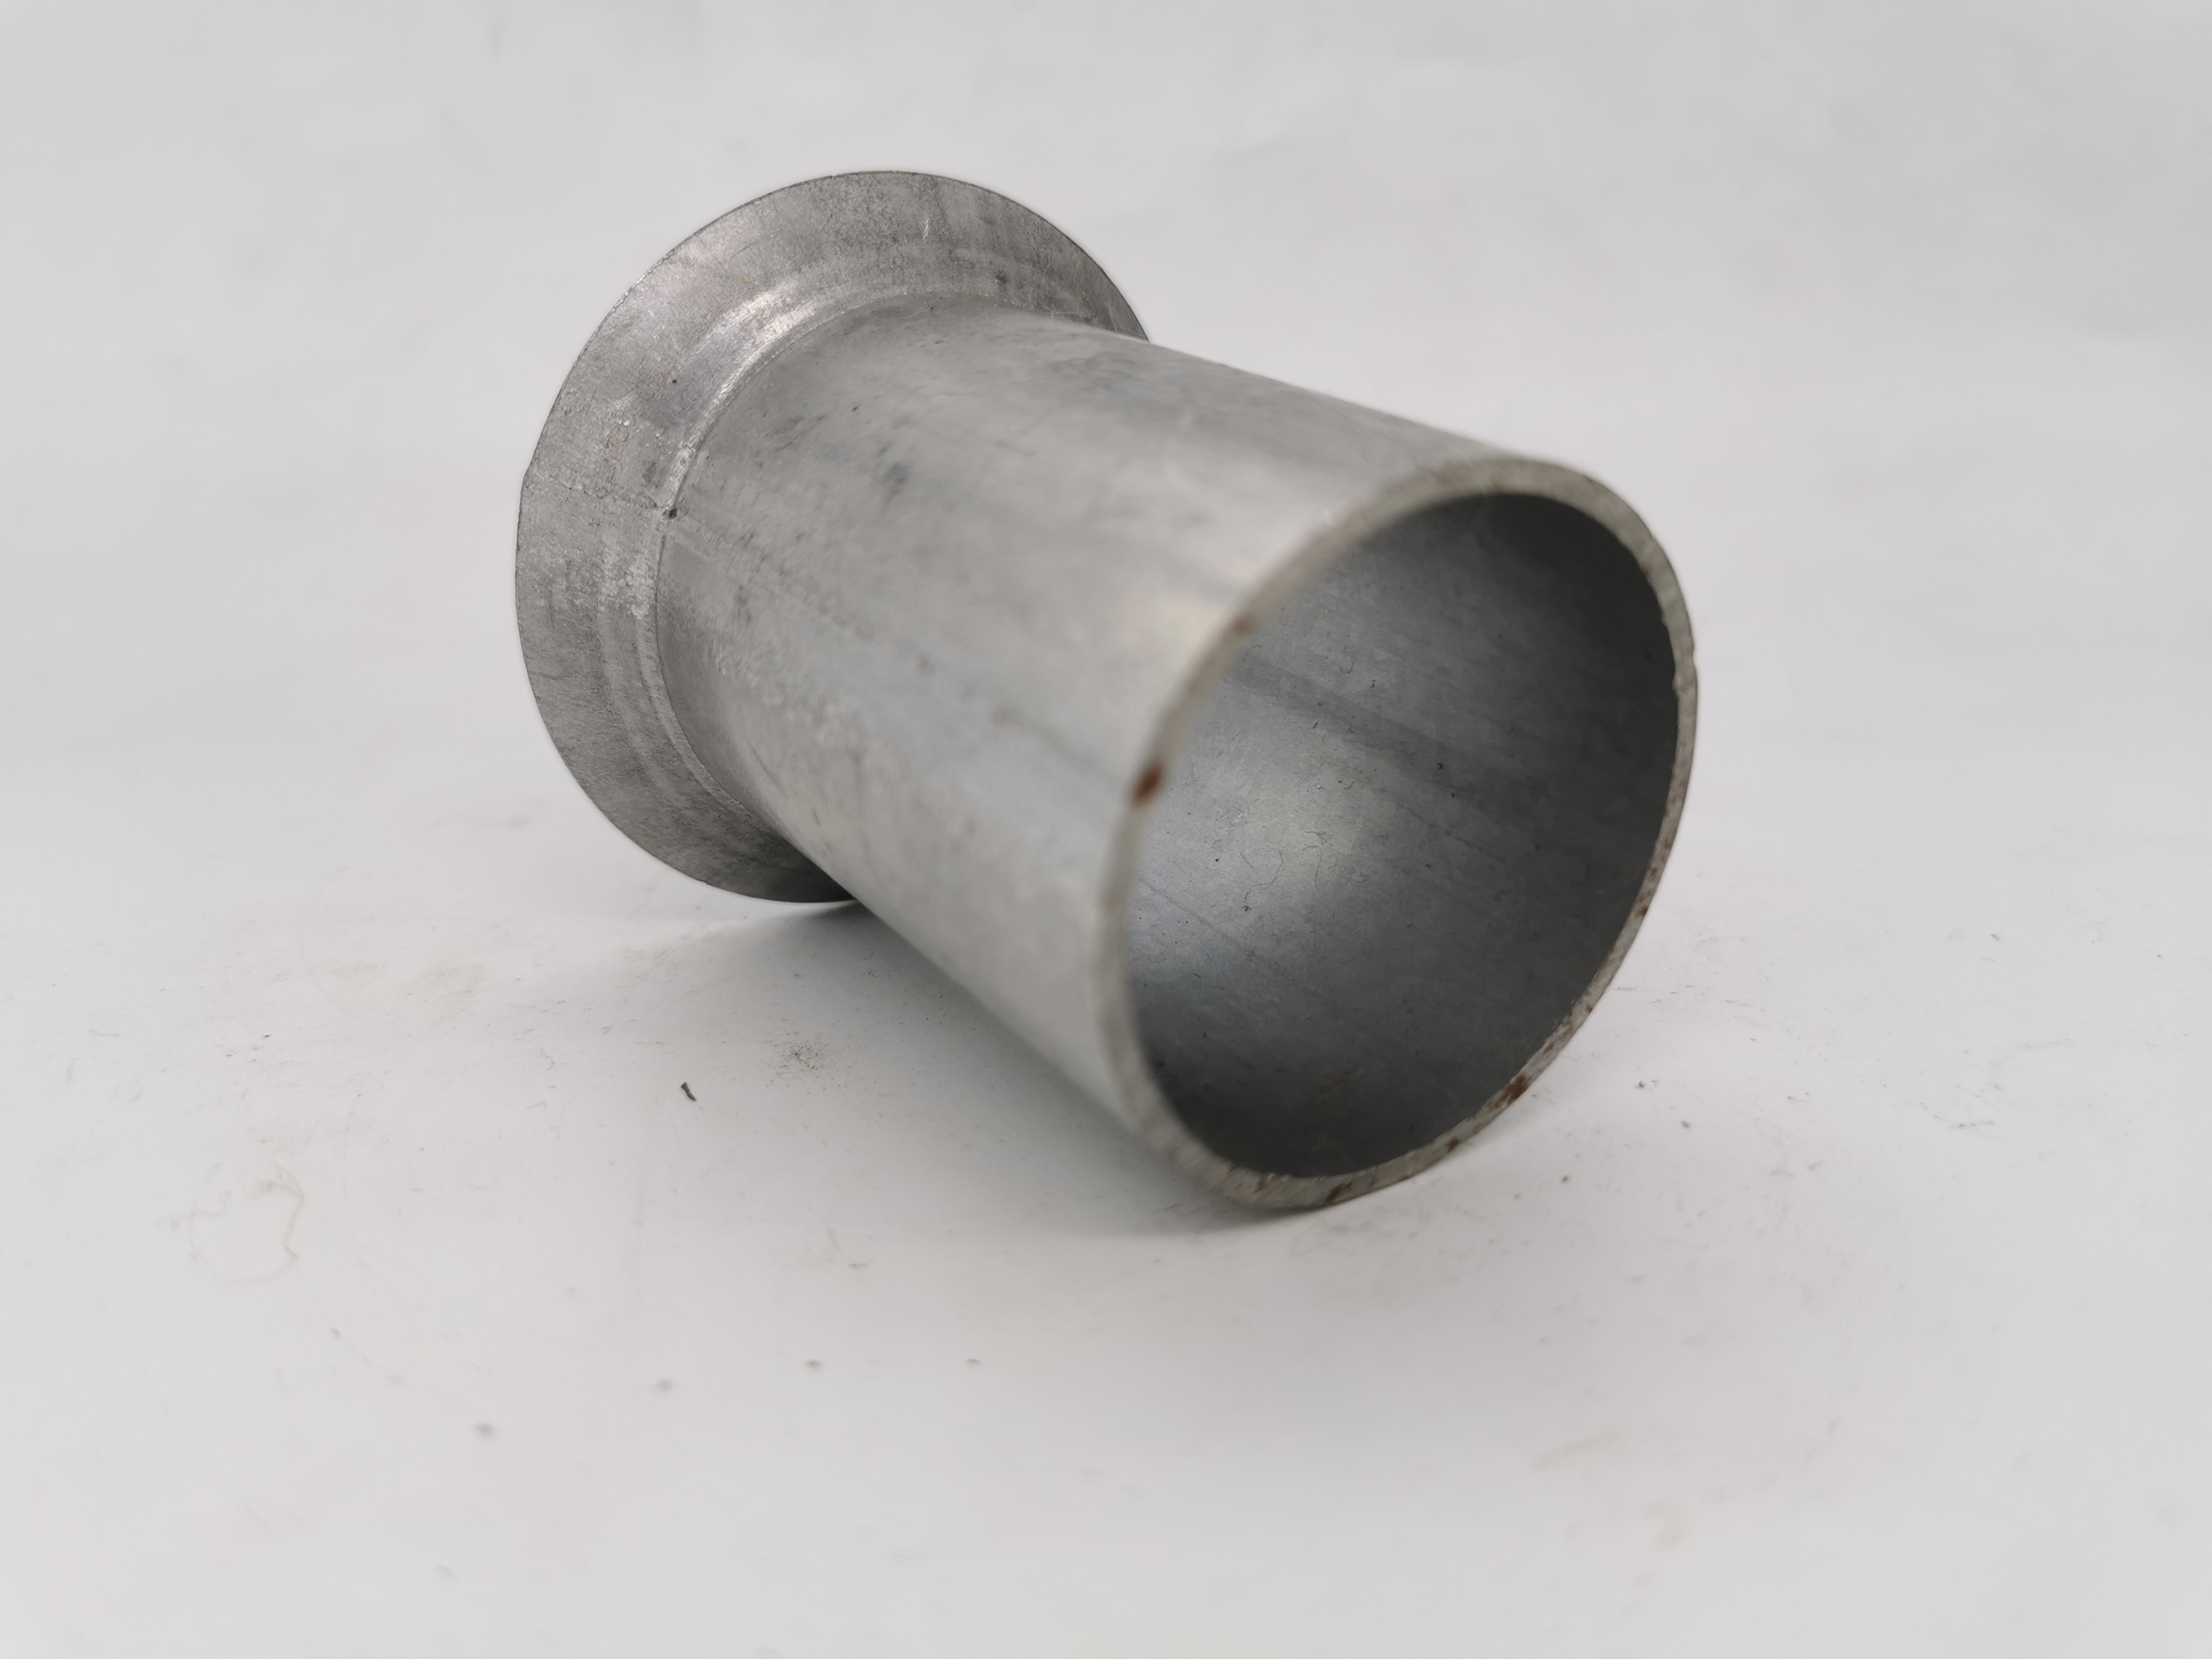 Customized metal Valgus tube ends